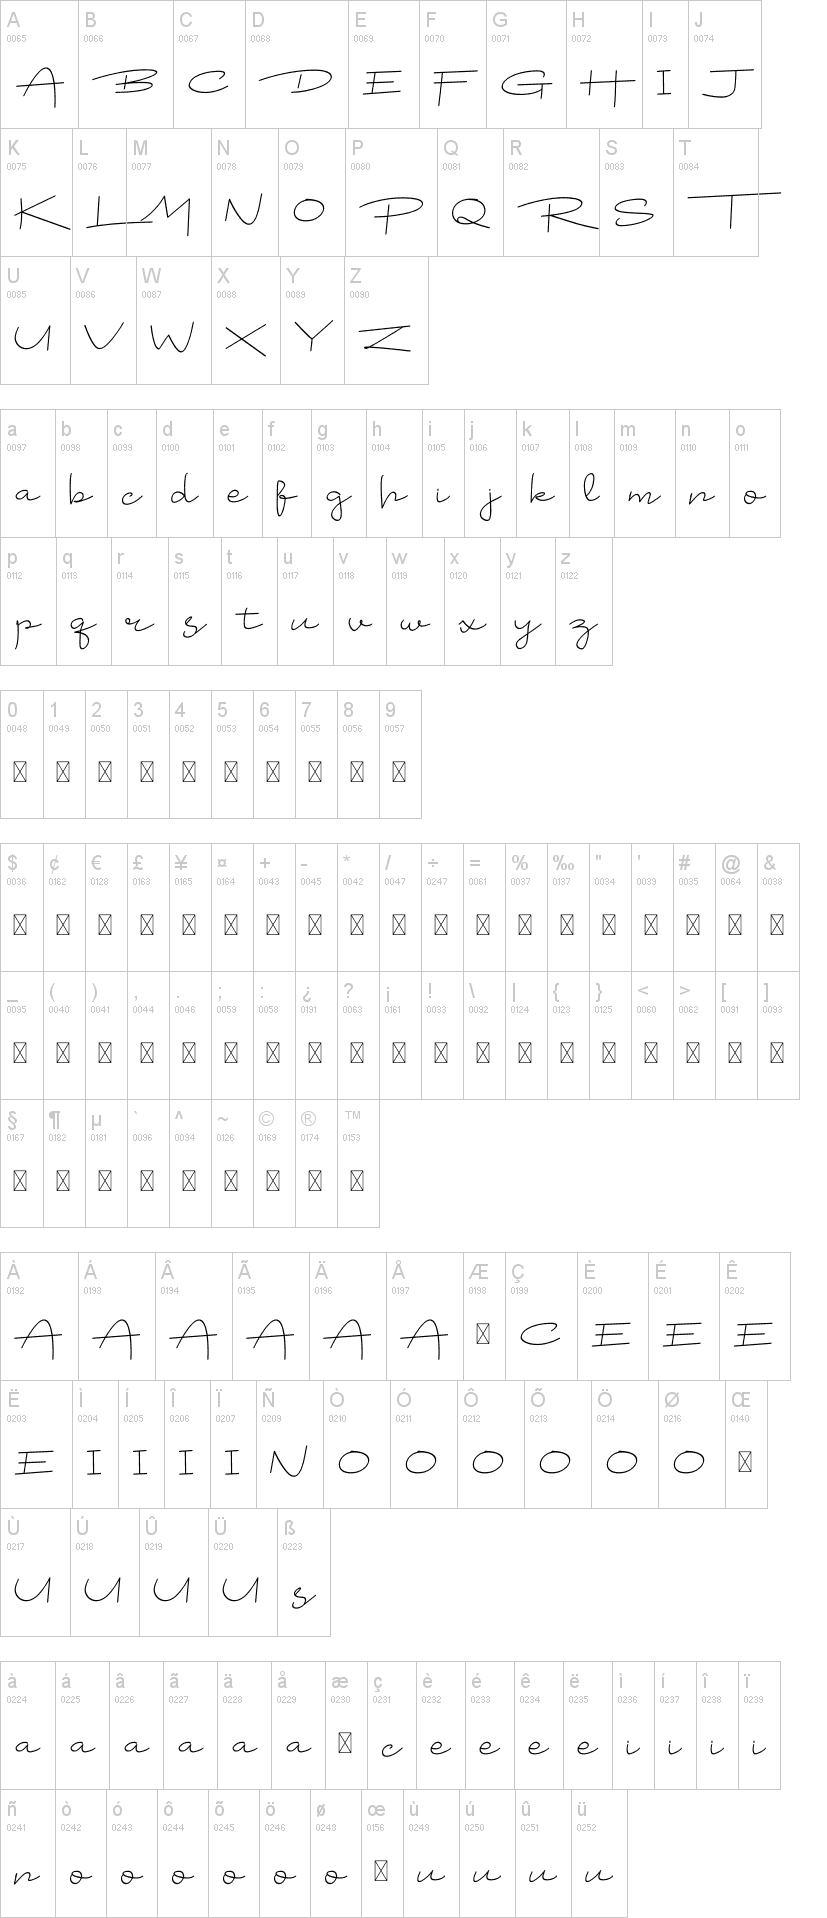 Badrudin Script